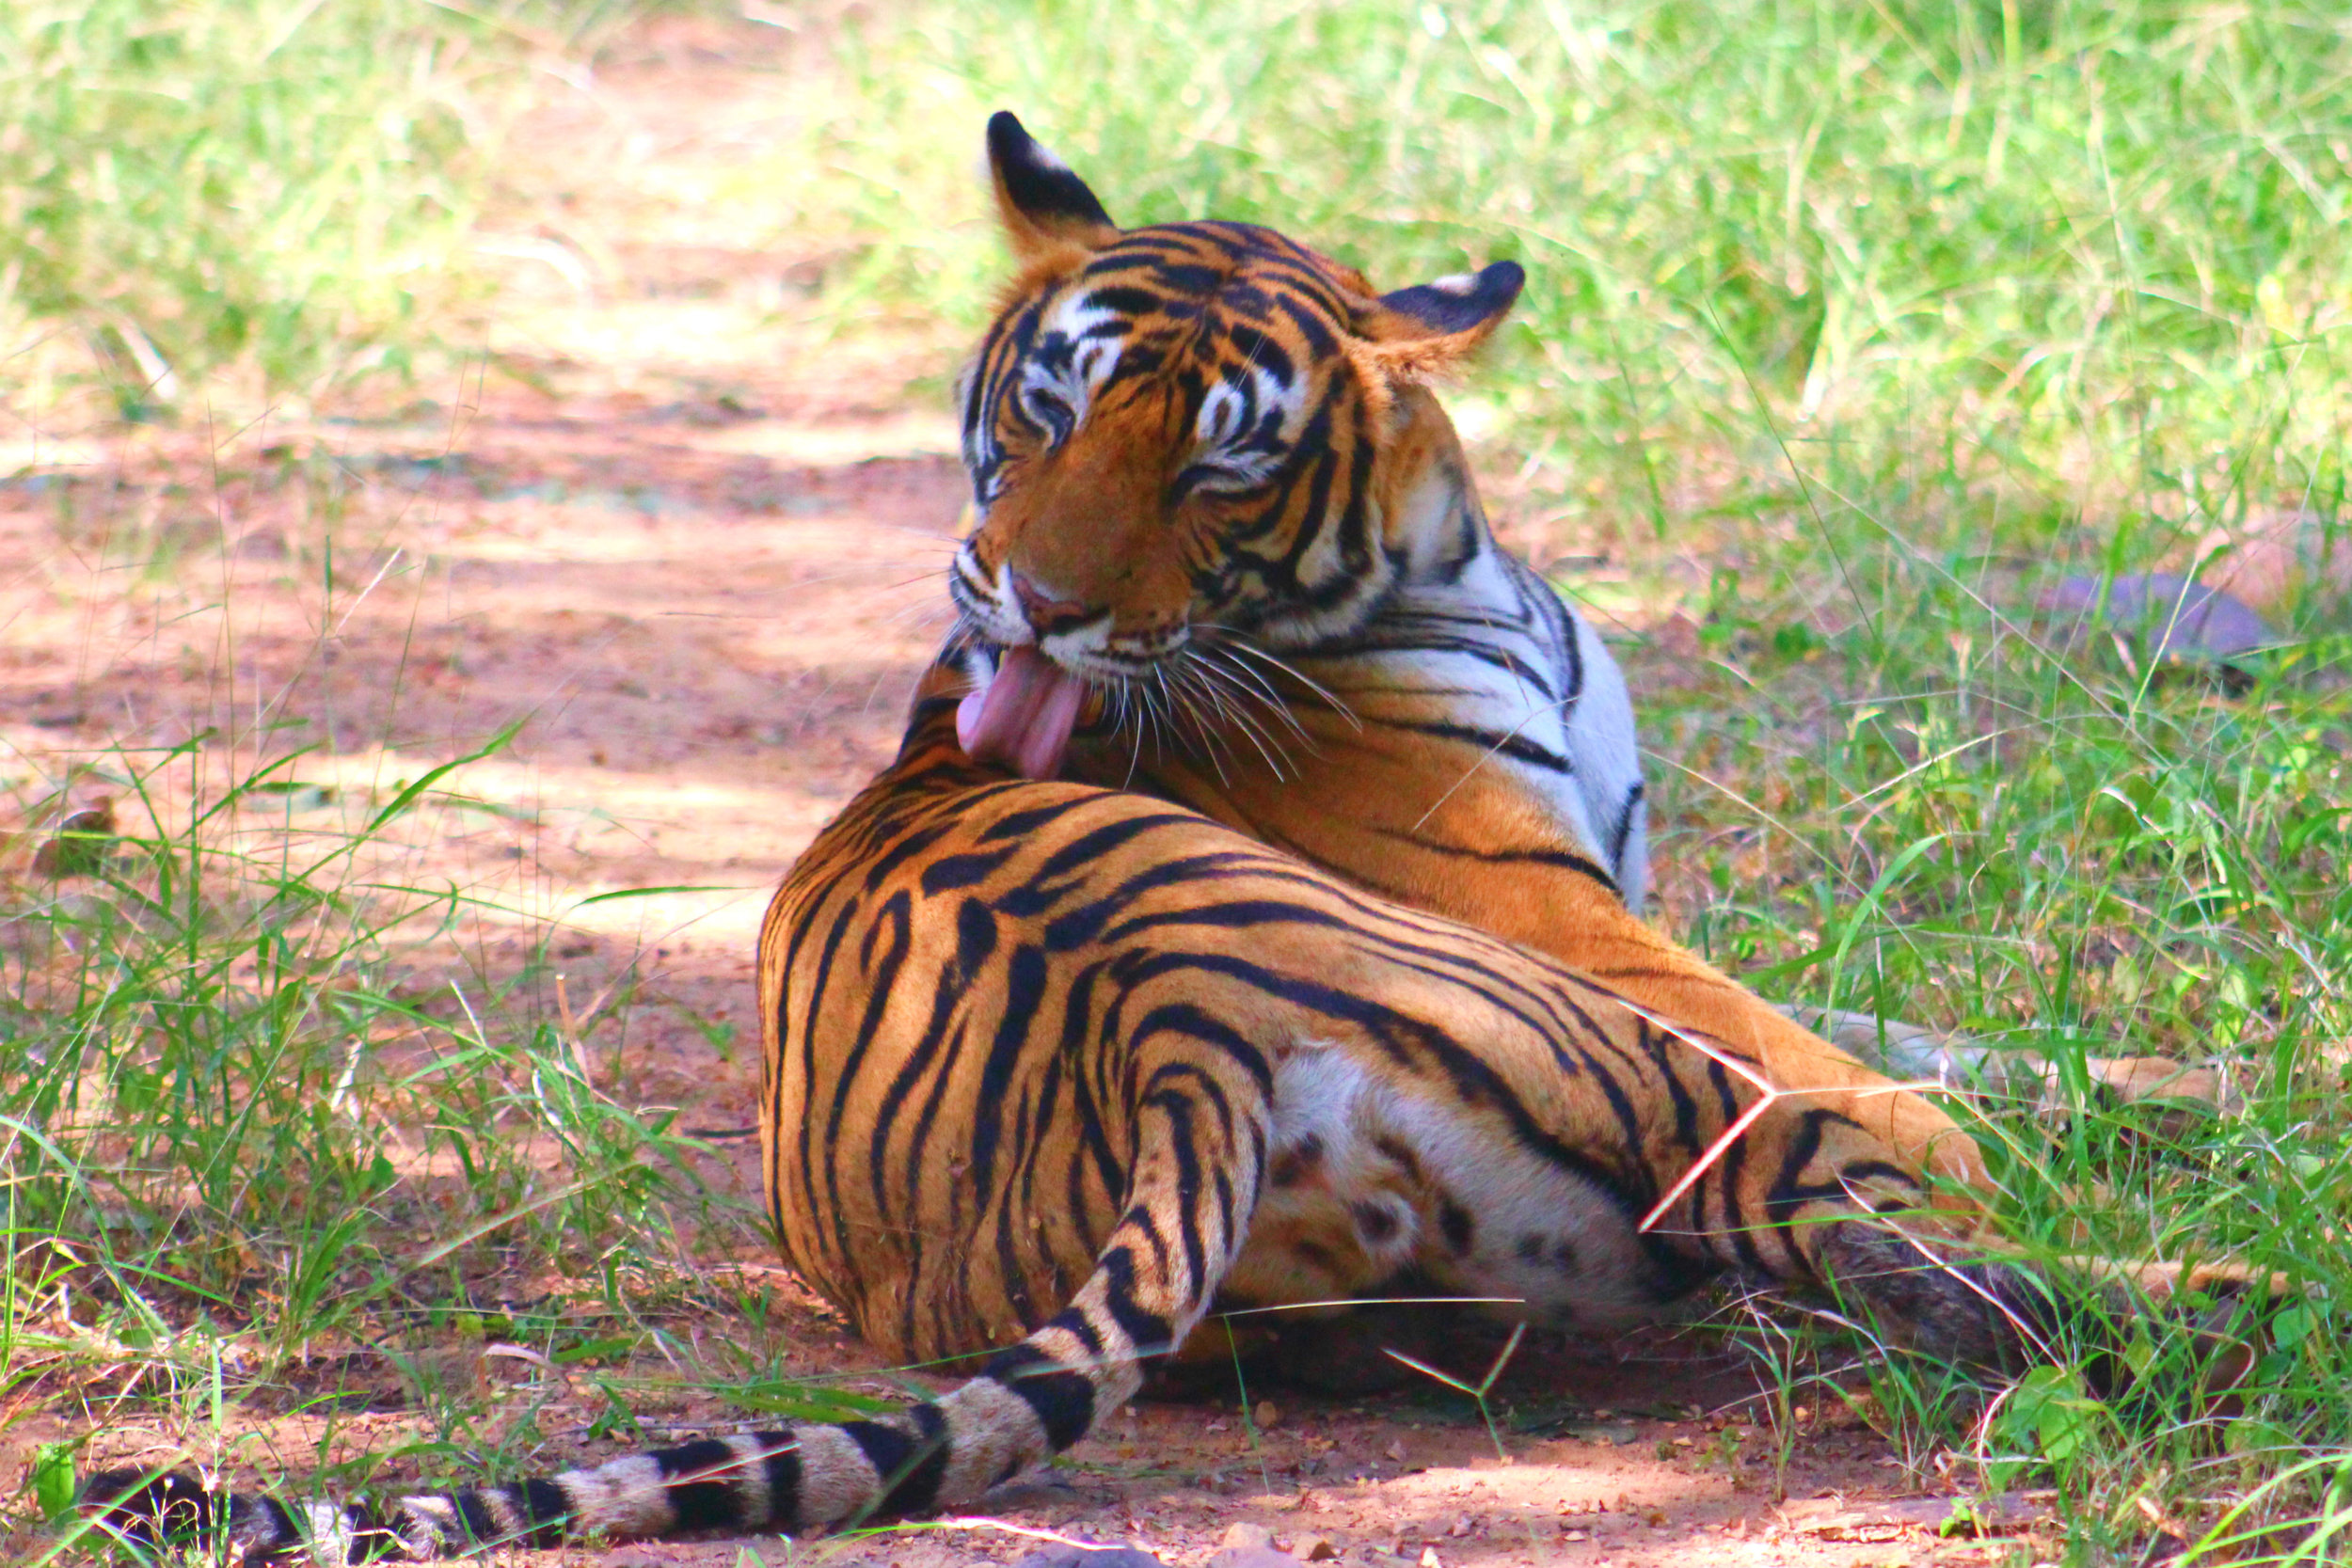 Tiger Safari in Ranthambore, India